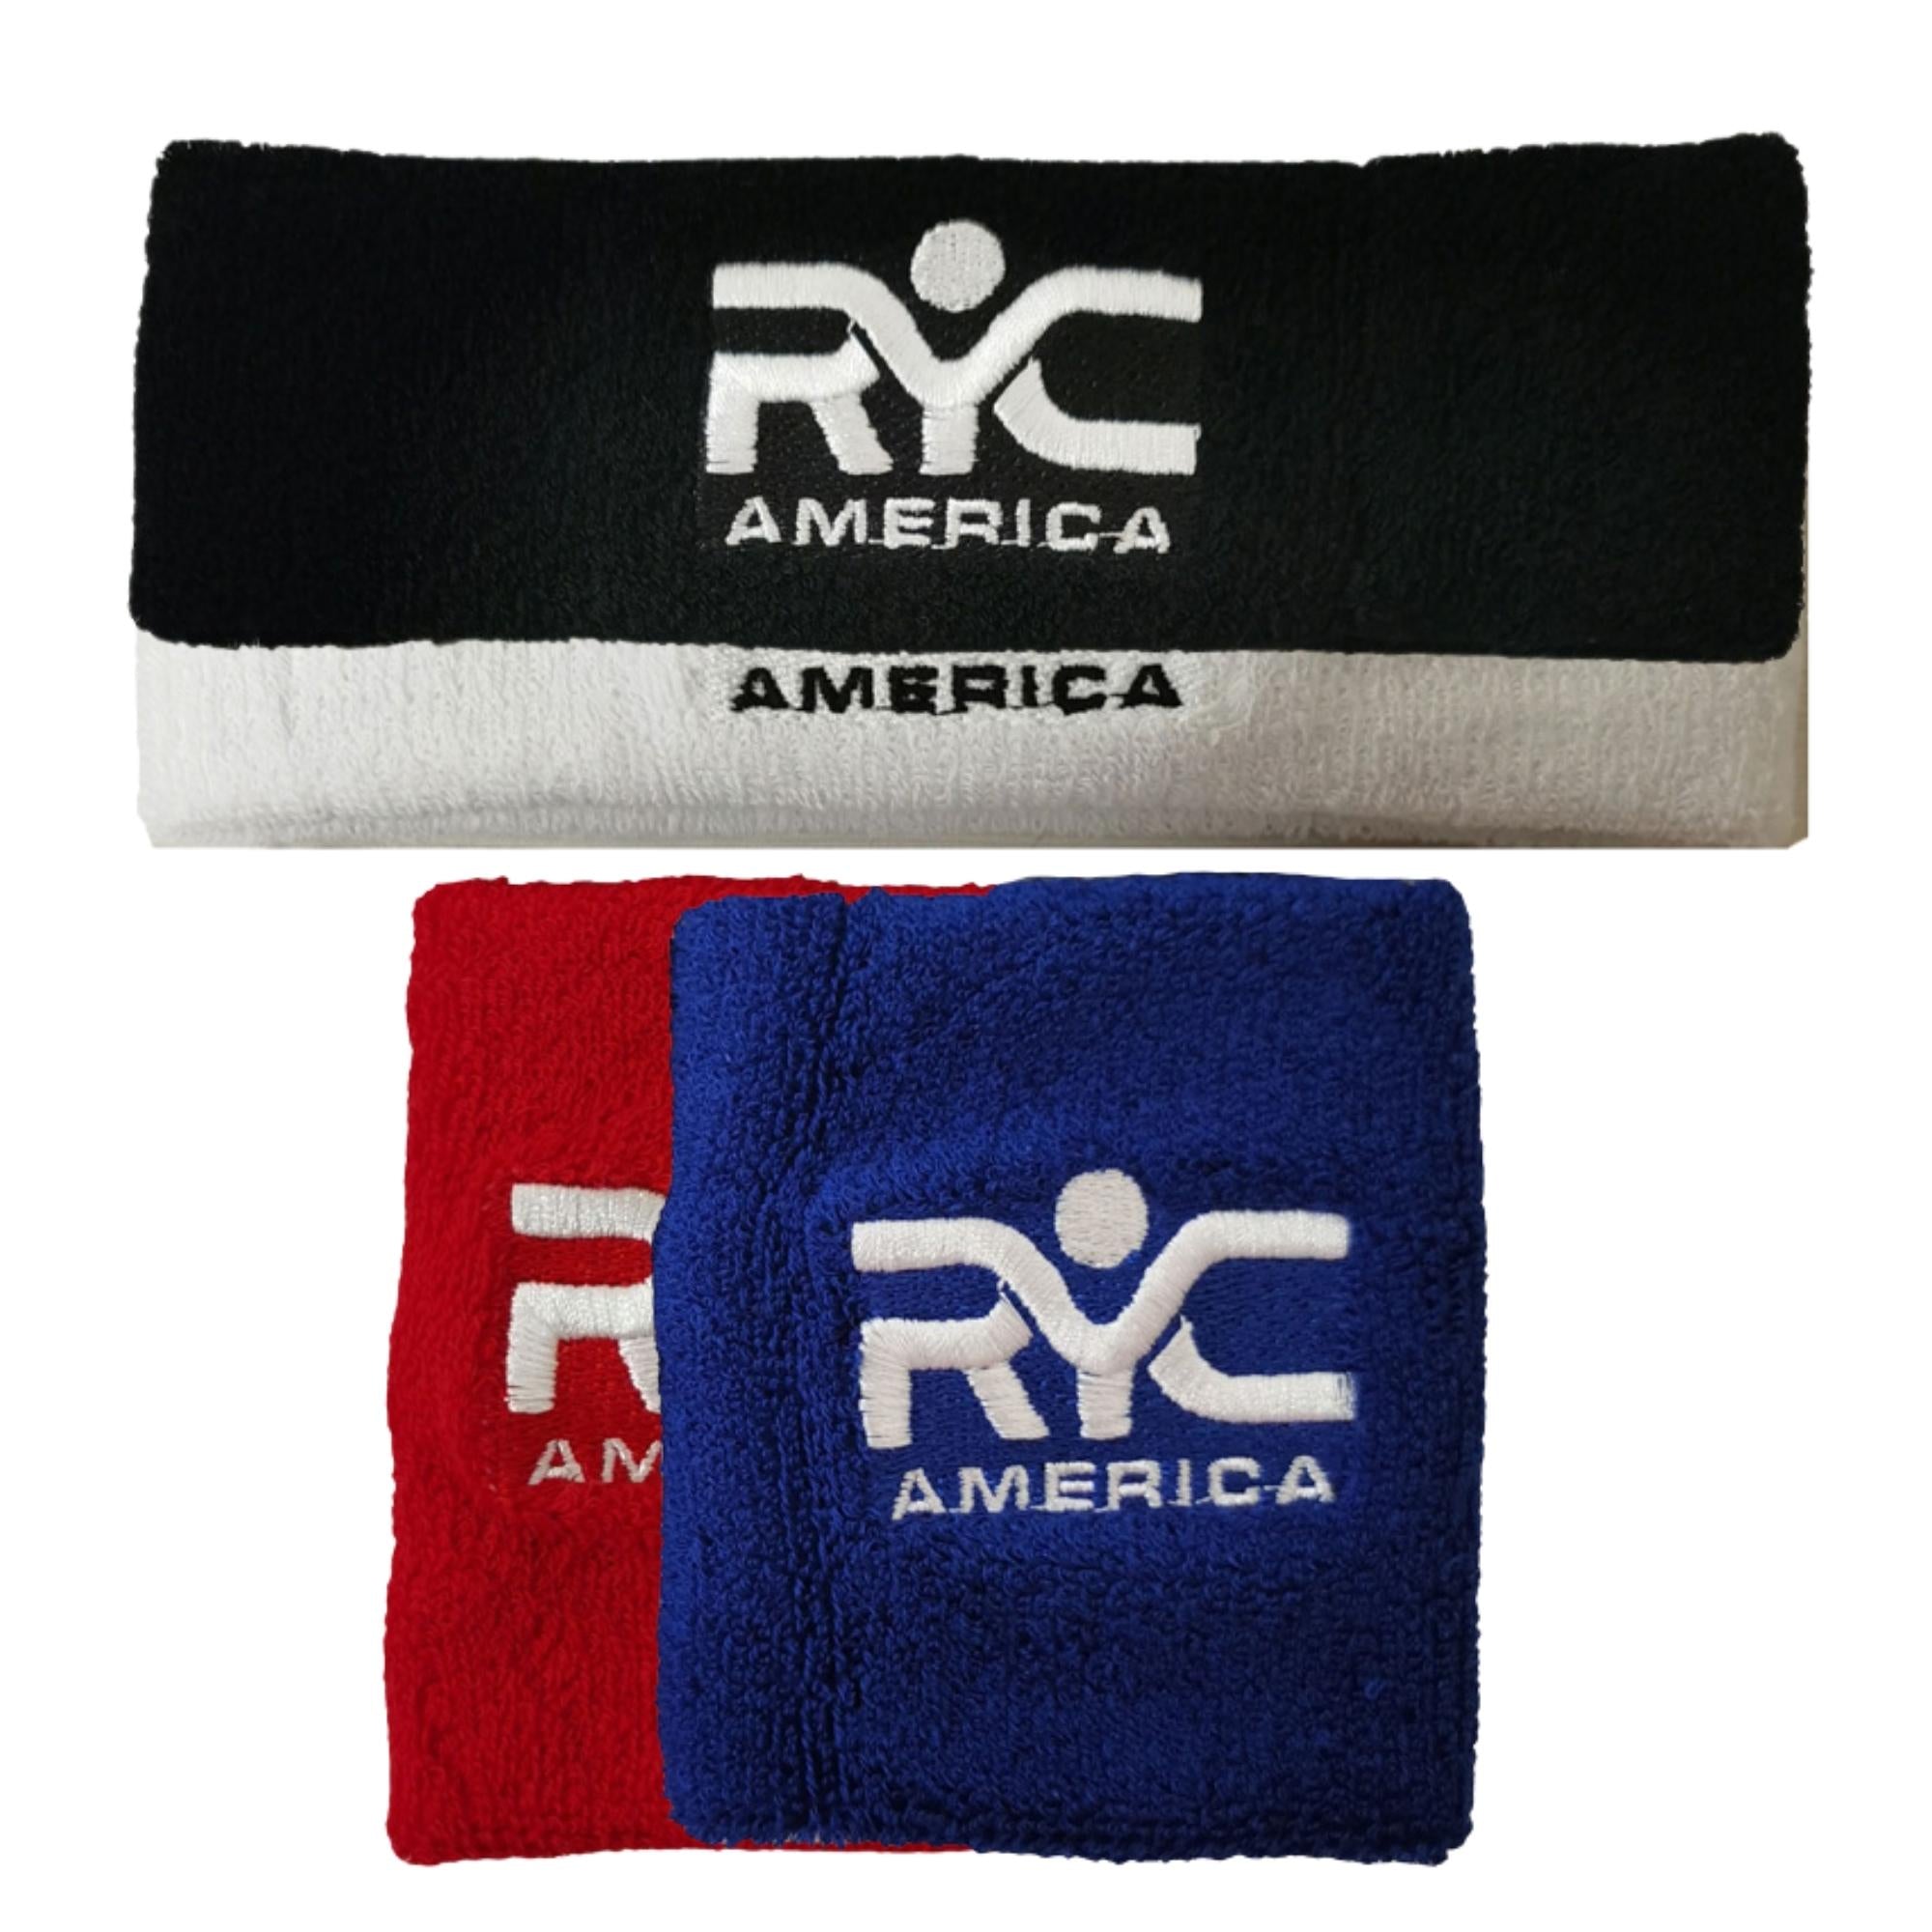 RYC America Wristband and Headband Set